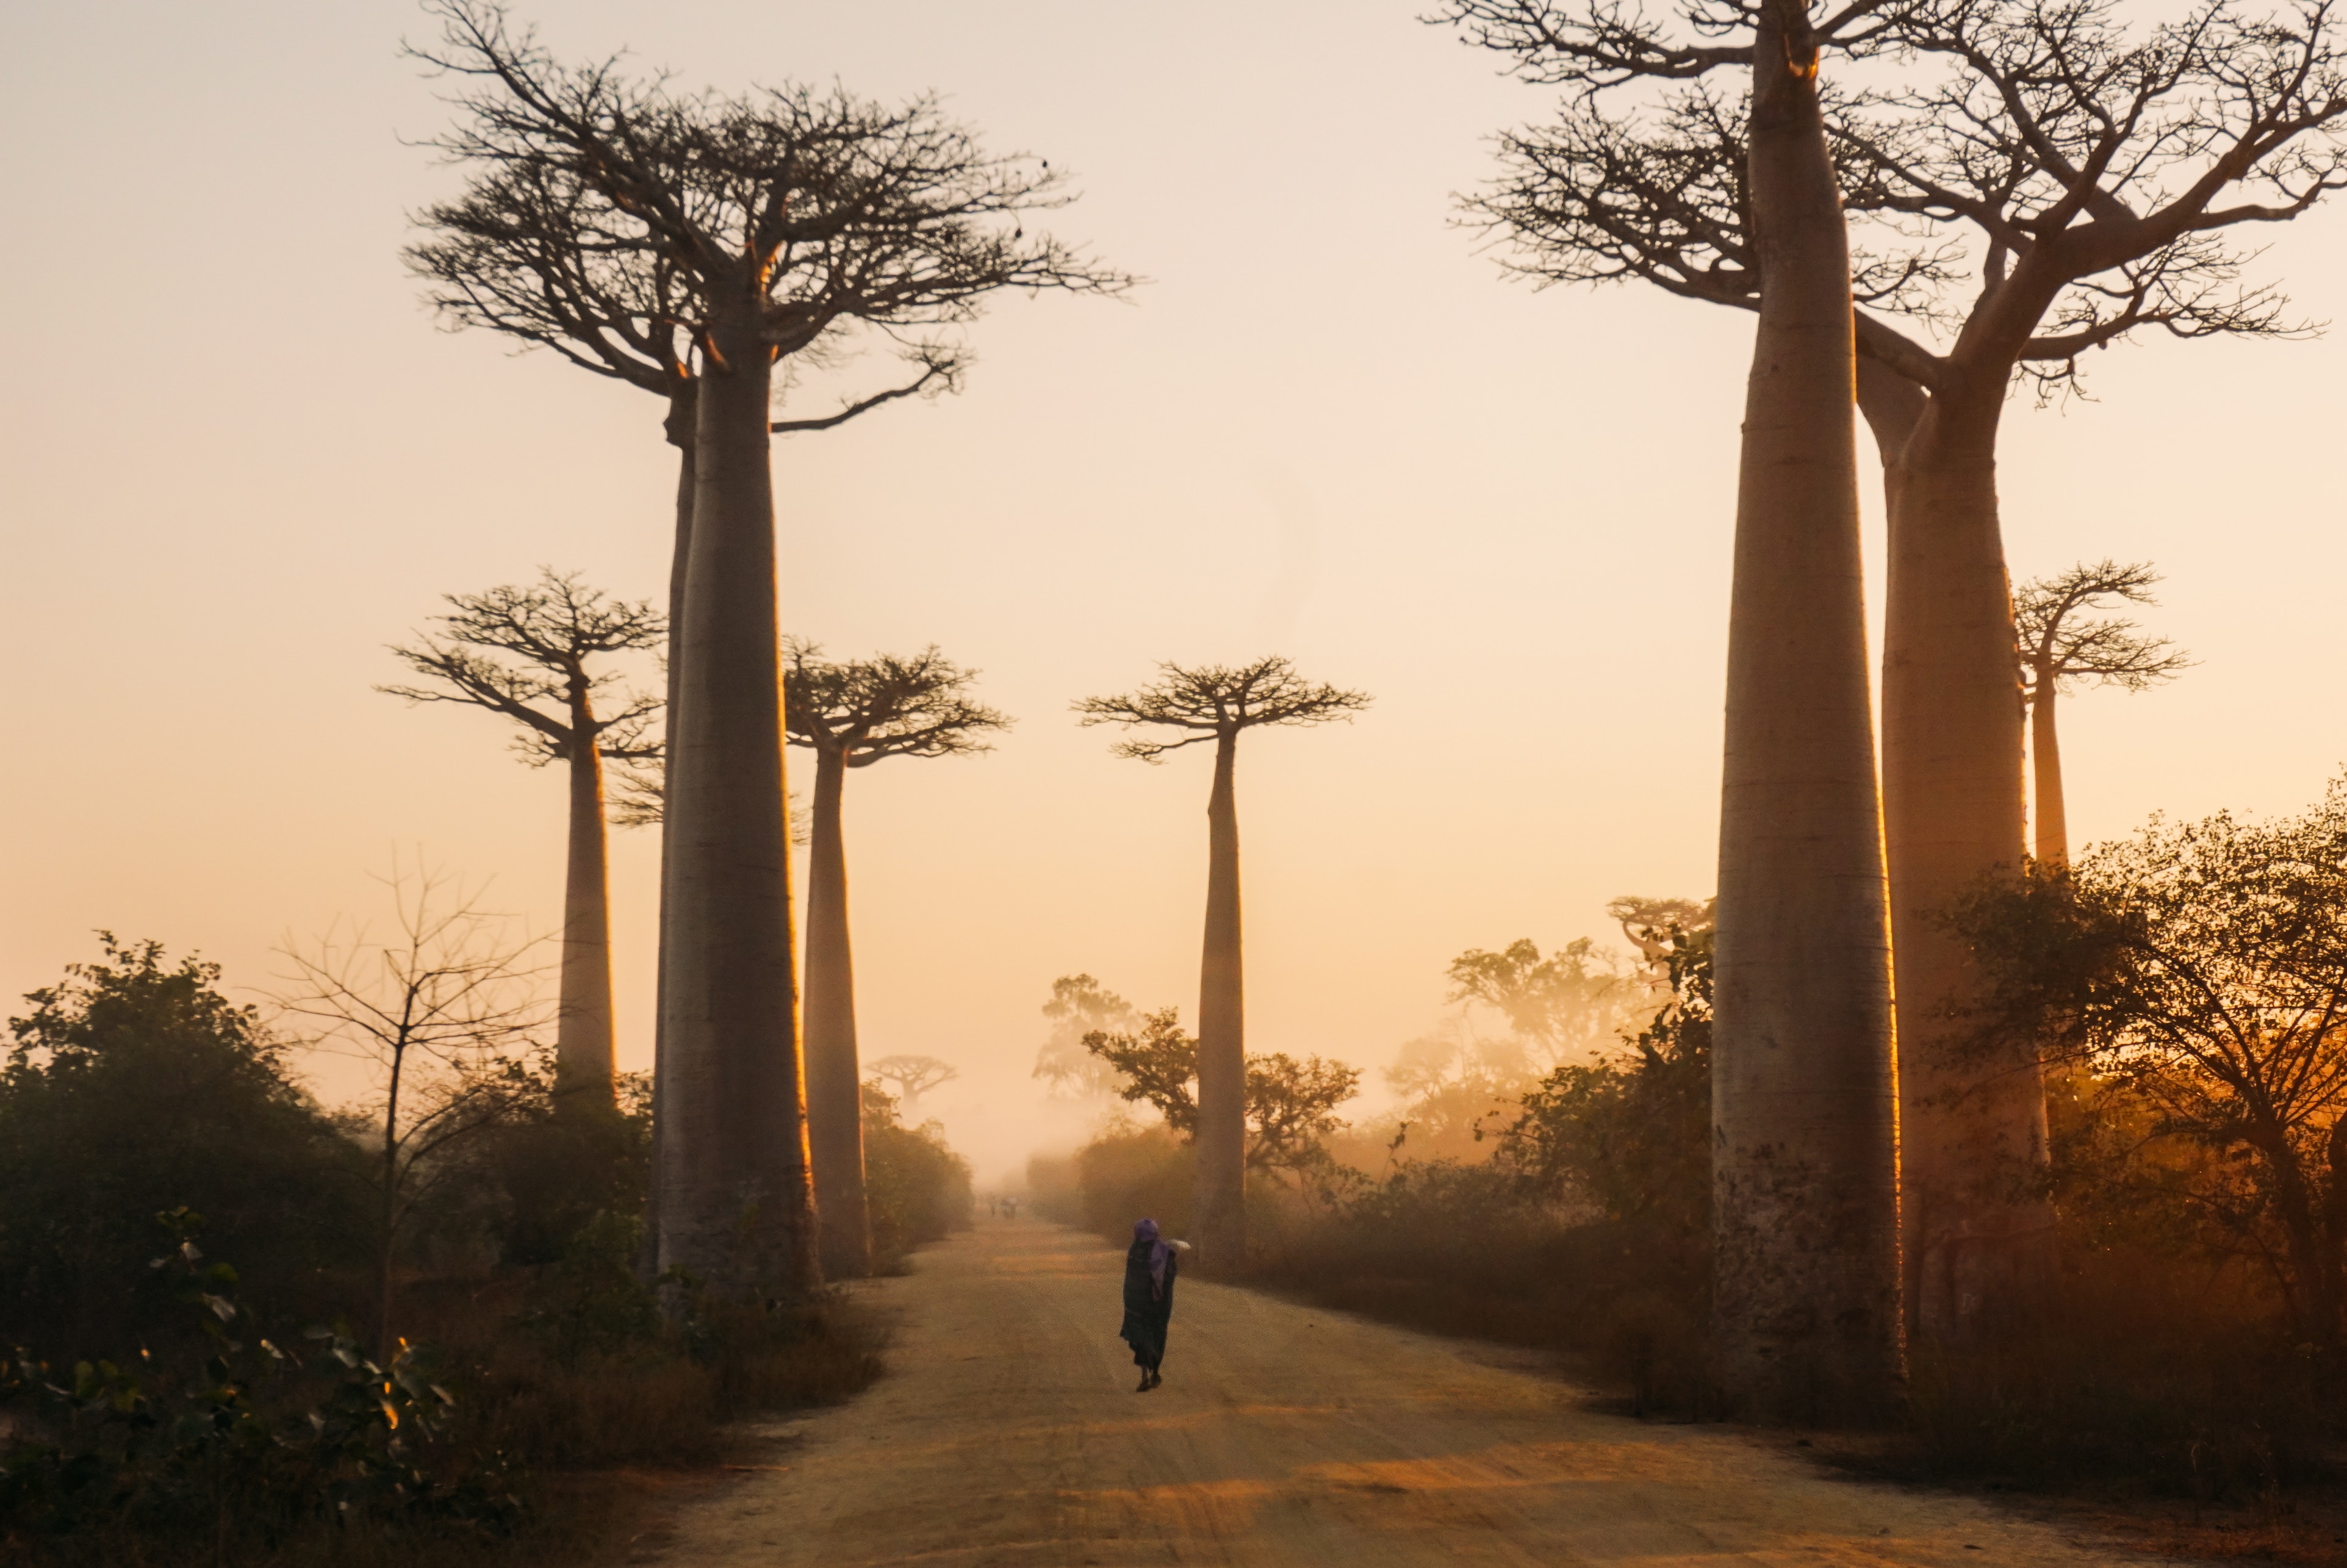 Walk in the baobab trees